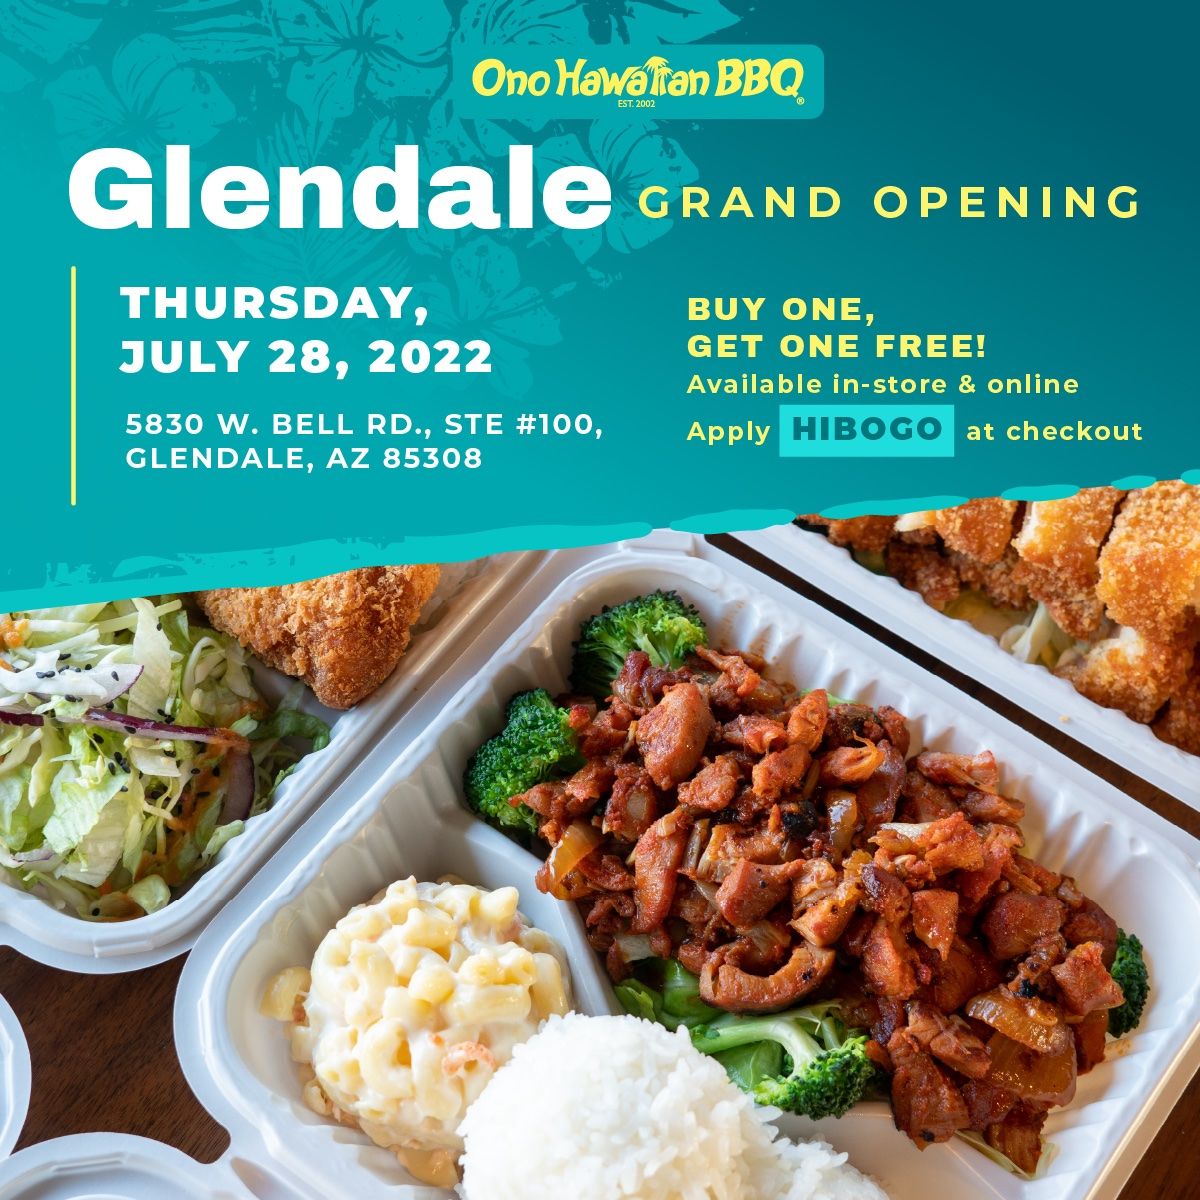 Ono Hawaiian BBQ Glendale, Arizona Grand Opening